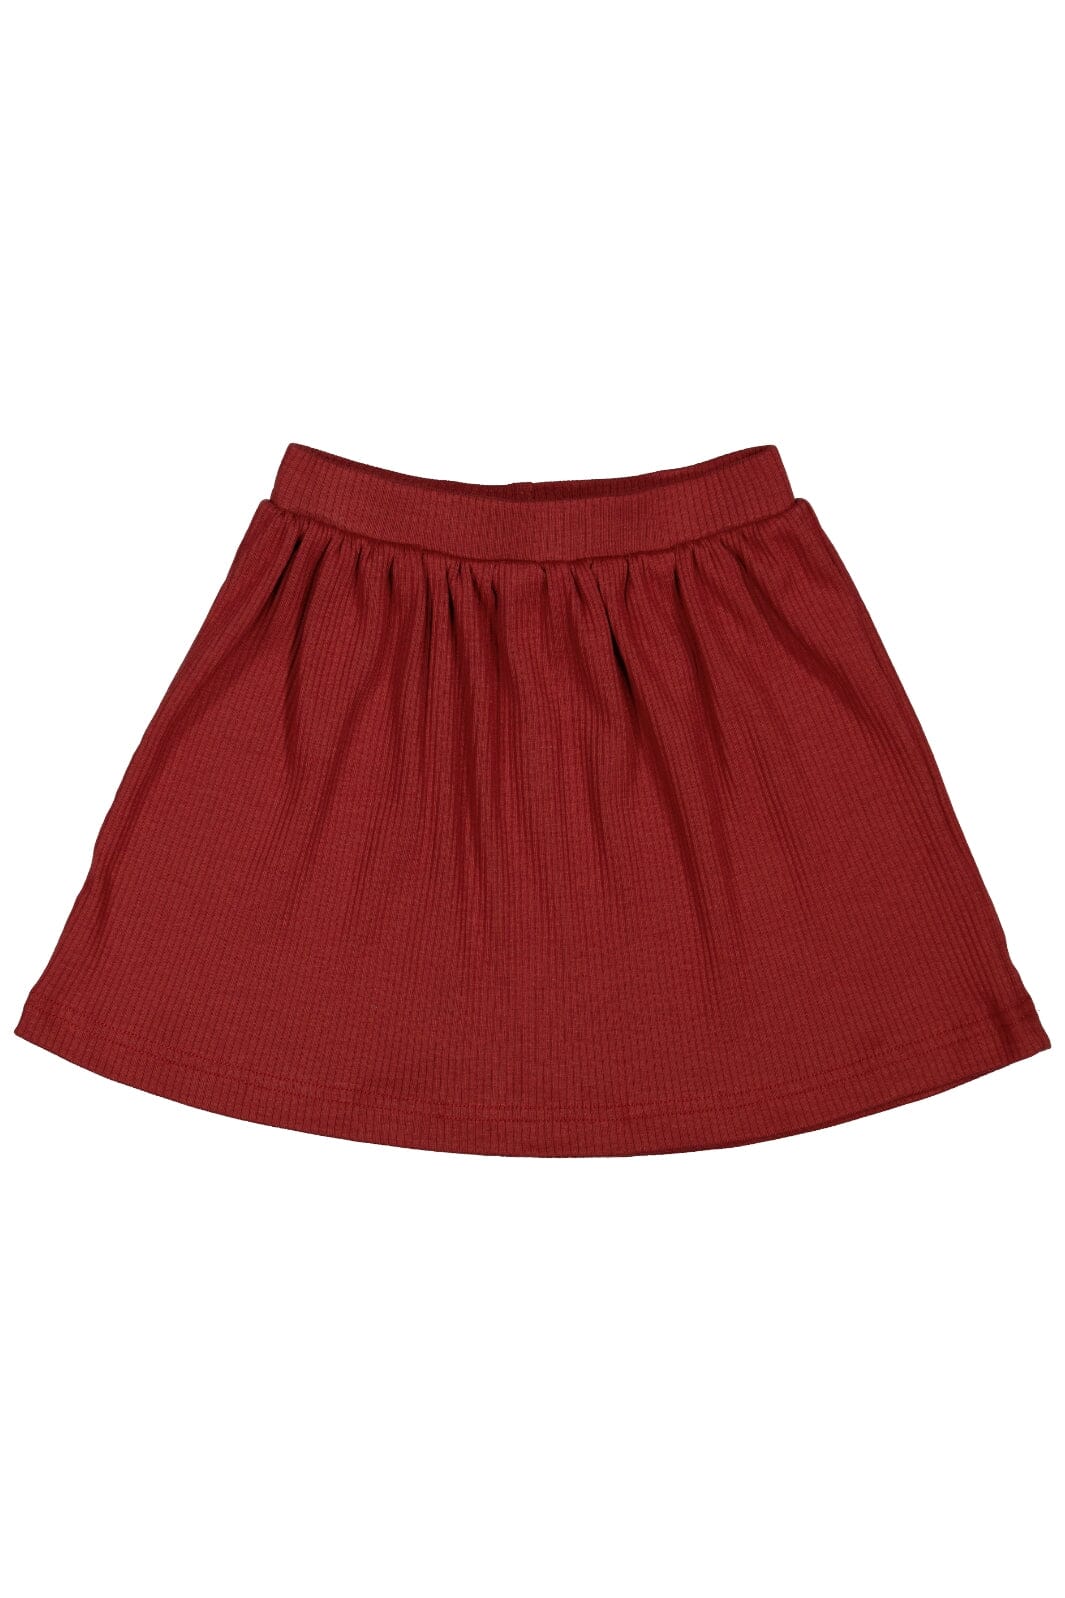 MarMar - Skirt - Hibiscus Red 3541 Nederdele 